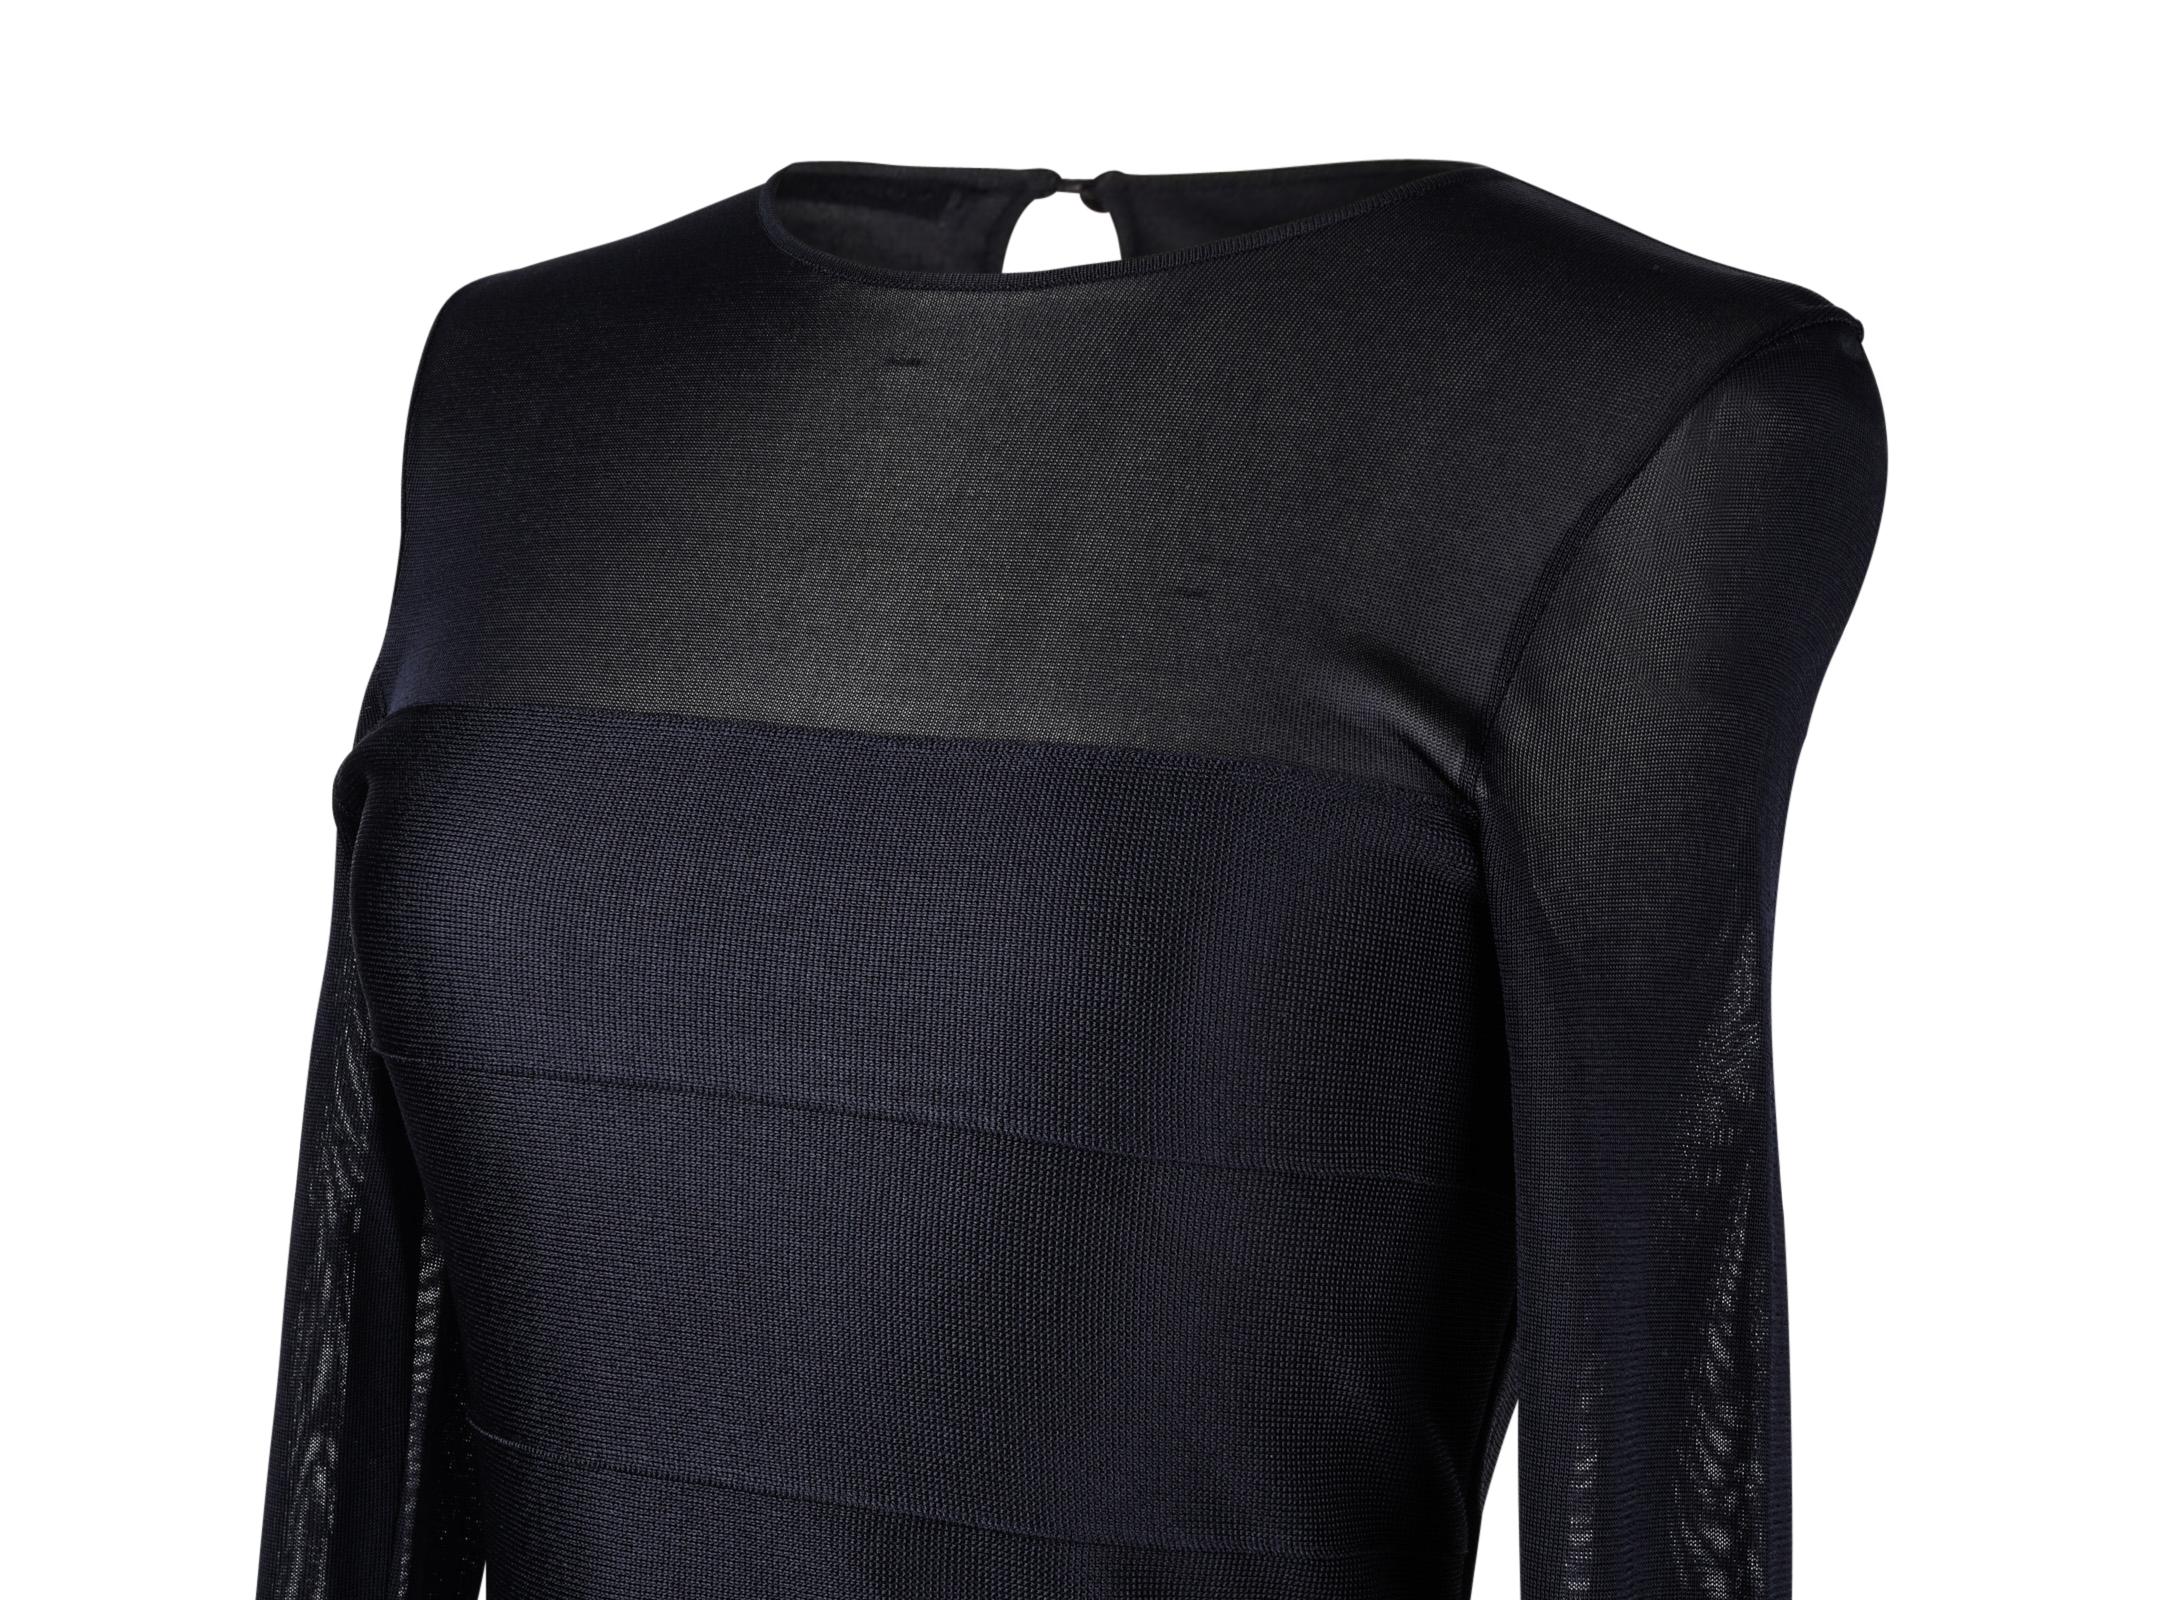 Christian Dior Dress Black Bandage and Mesh 40 / 8 3